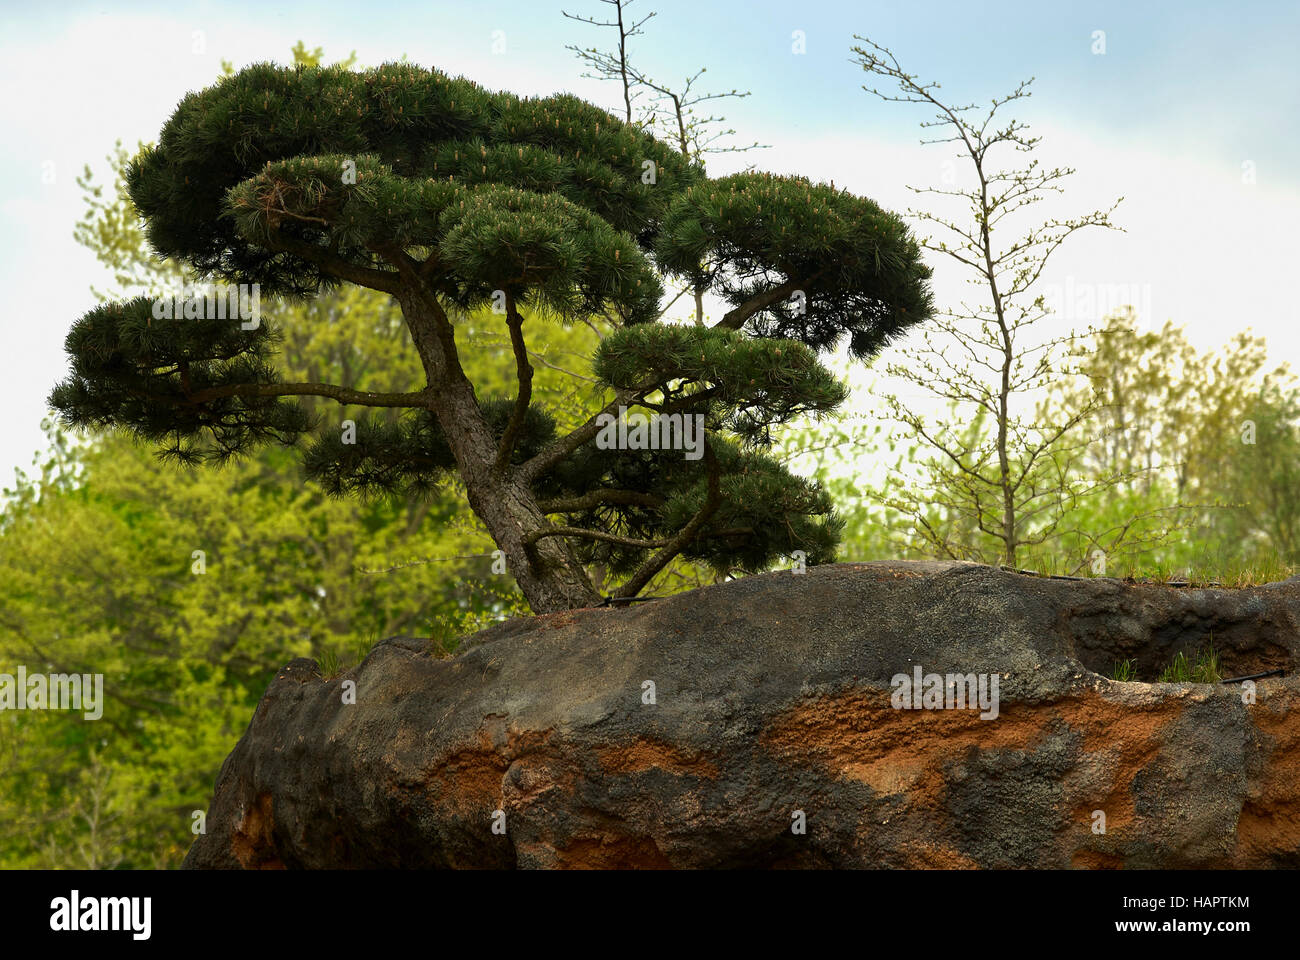 Bonsai pine tree on a natural rock Stock Photo